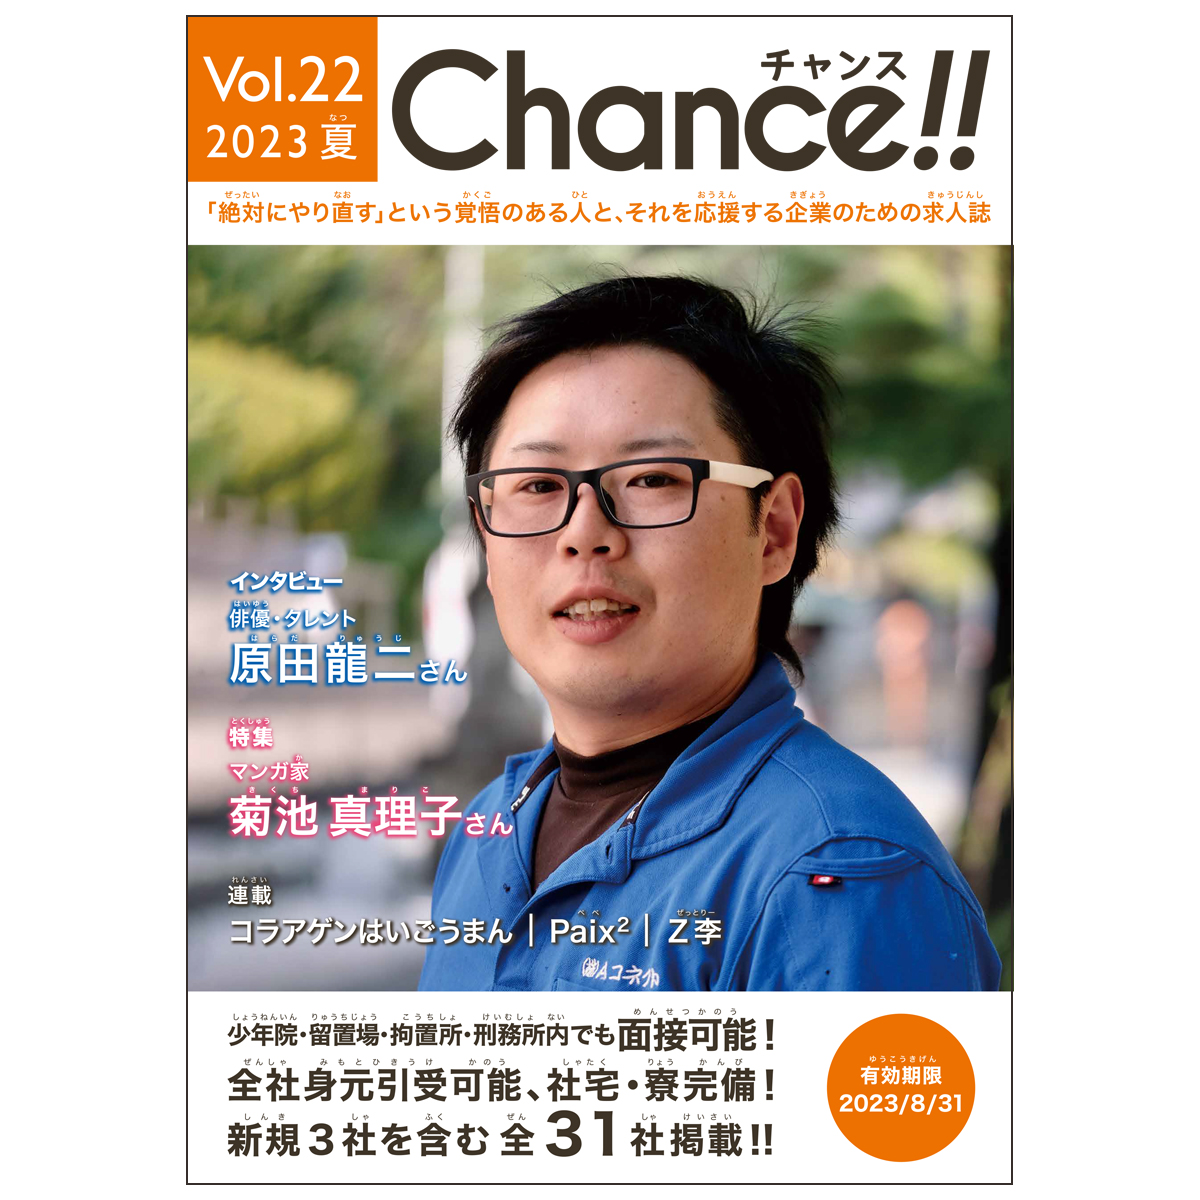 Chance!! Vol.22